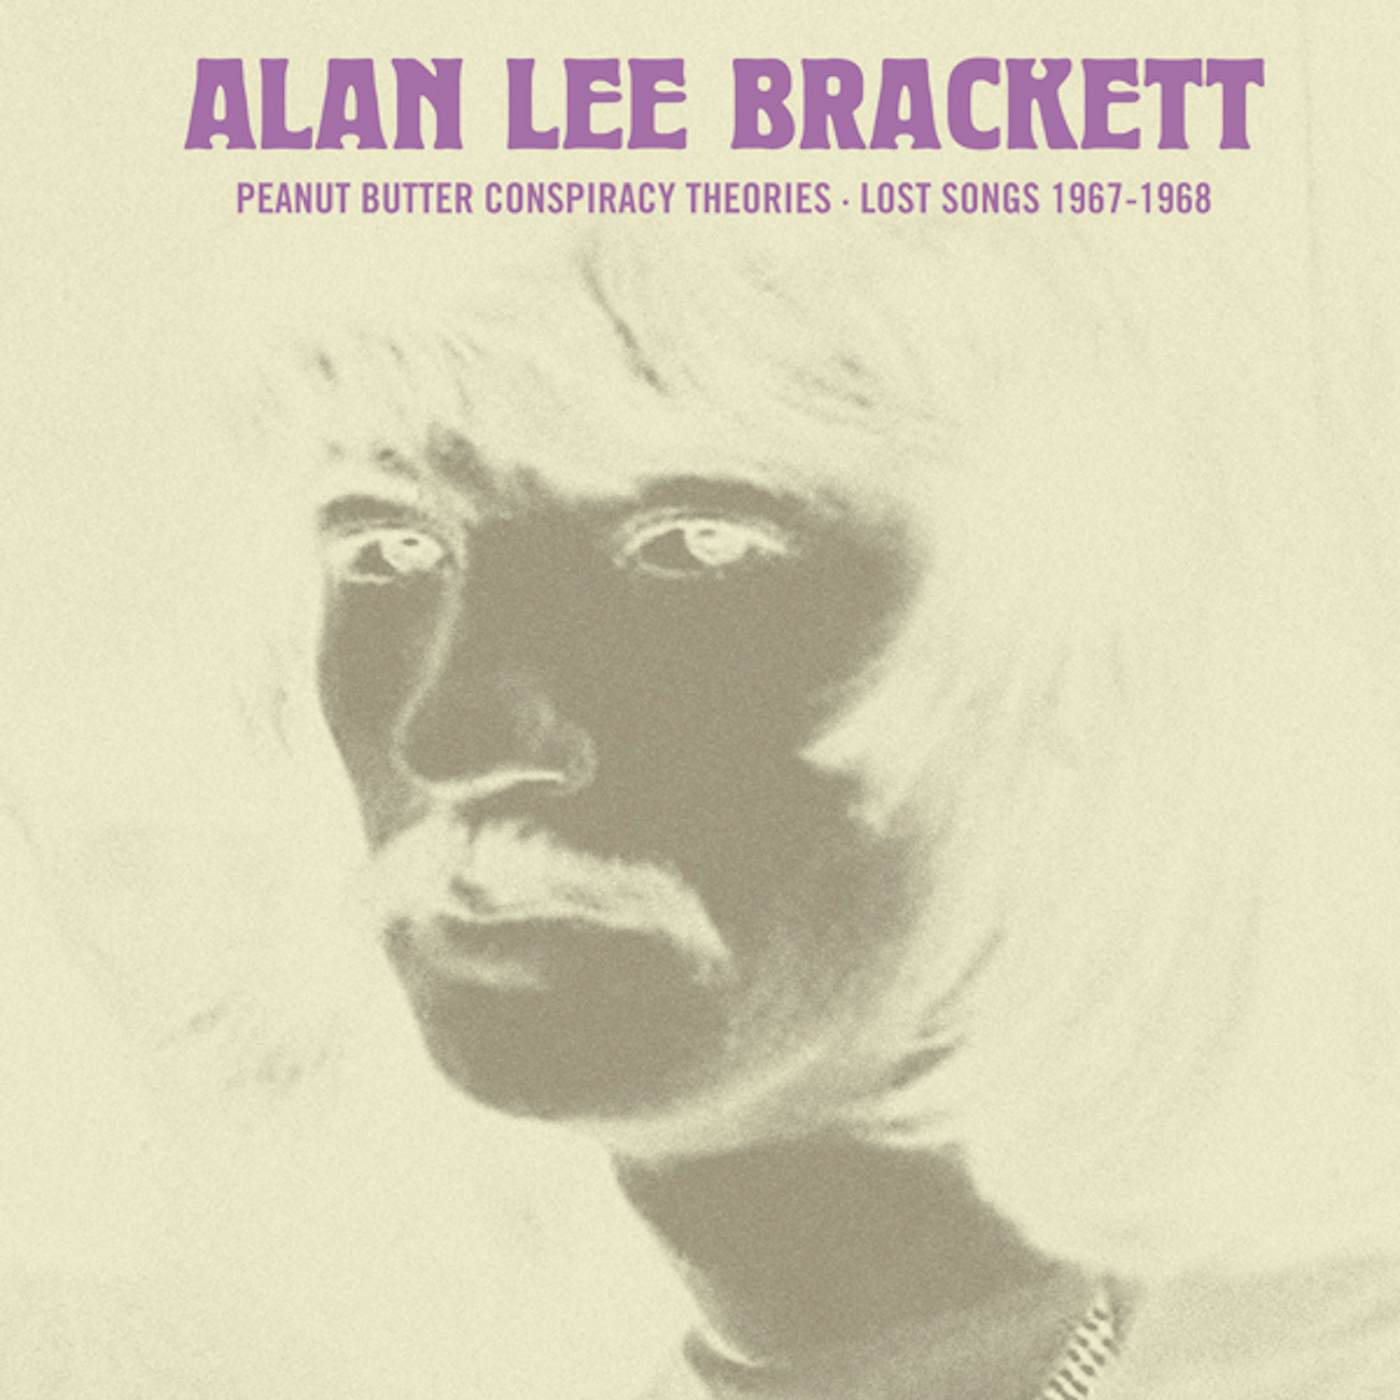 Alan Lee Brackett PEANUT BUTTER CONSPIRACY THEORIES: LOST SONGS Vinyl Record